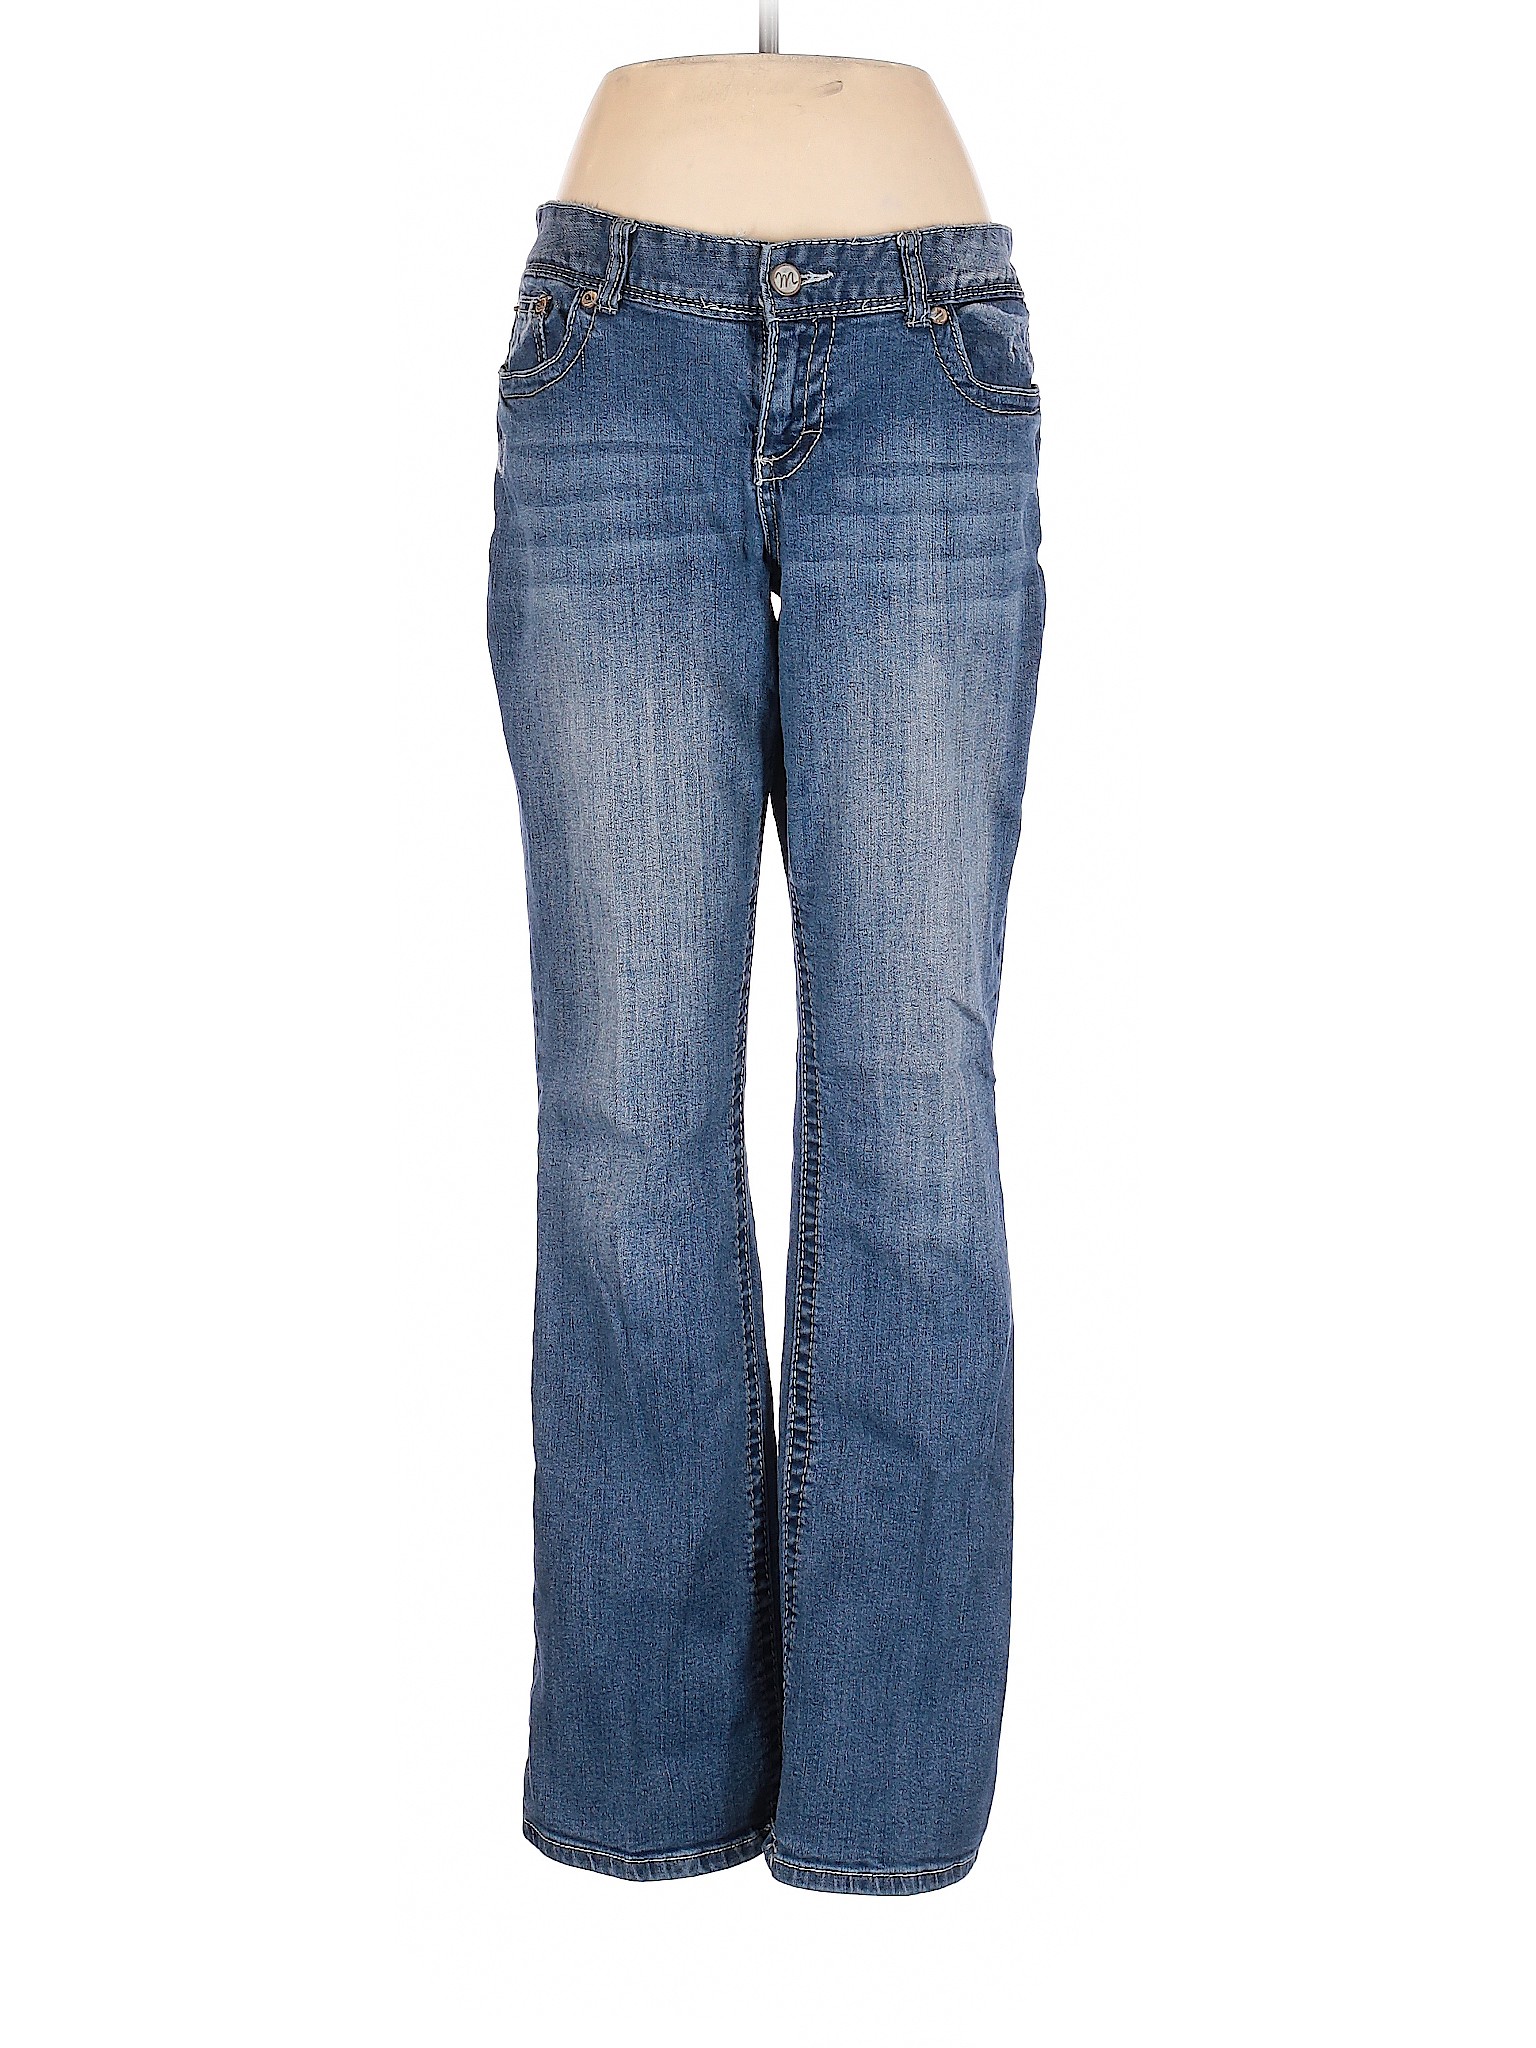 Maurices Women Blue Jeans 9 | eBay